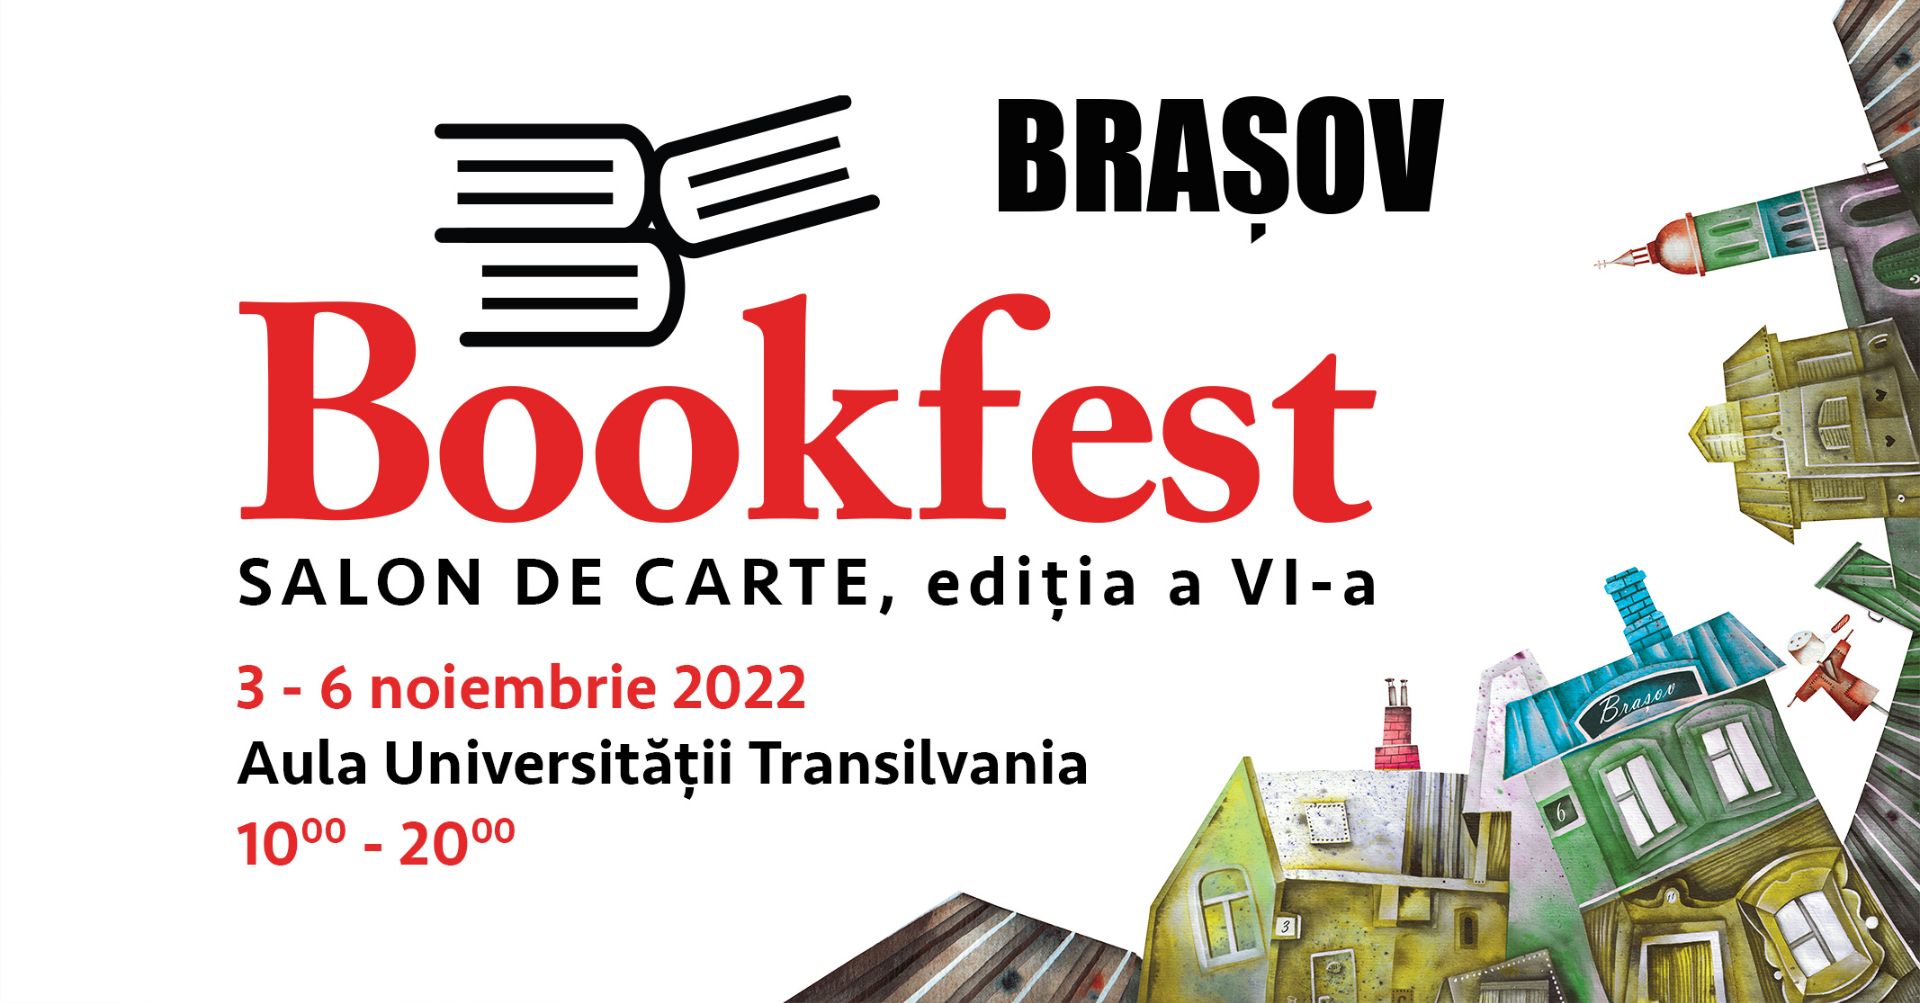 bookfest brasov